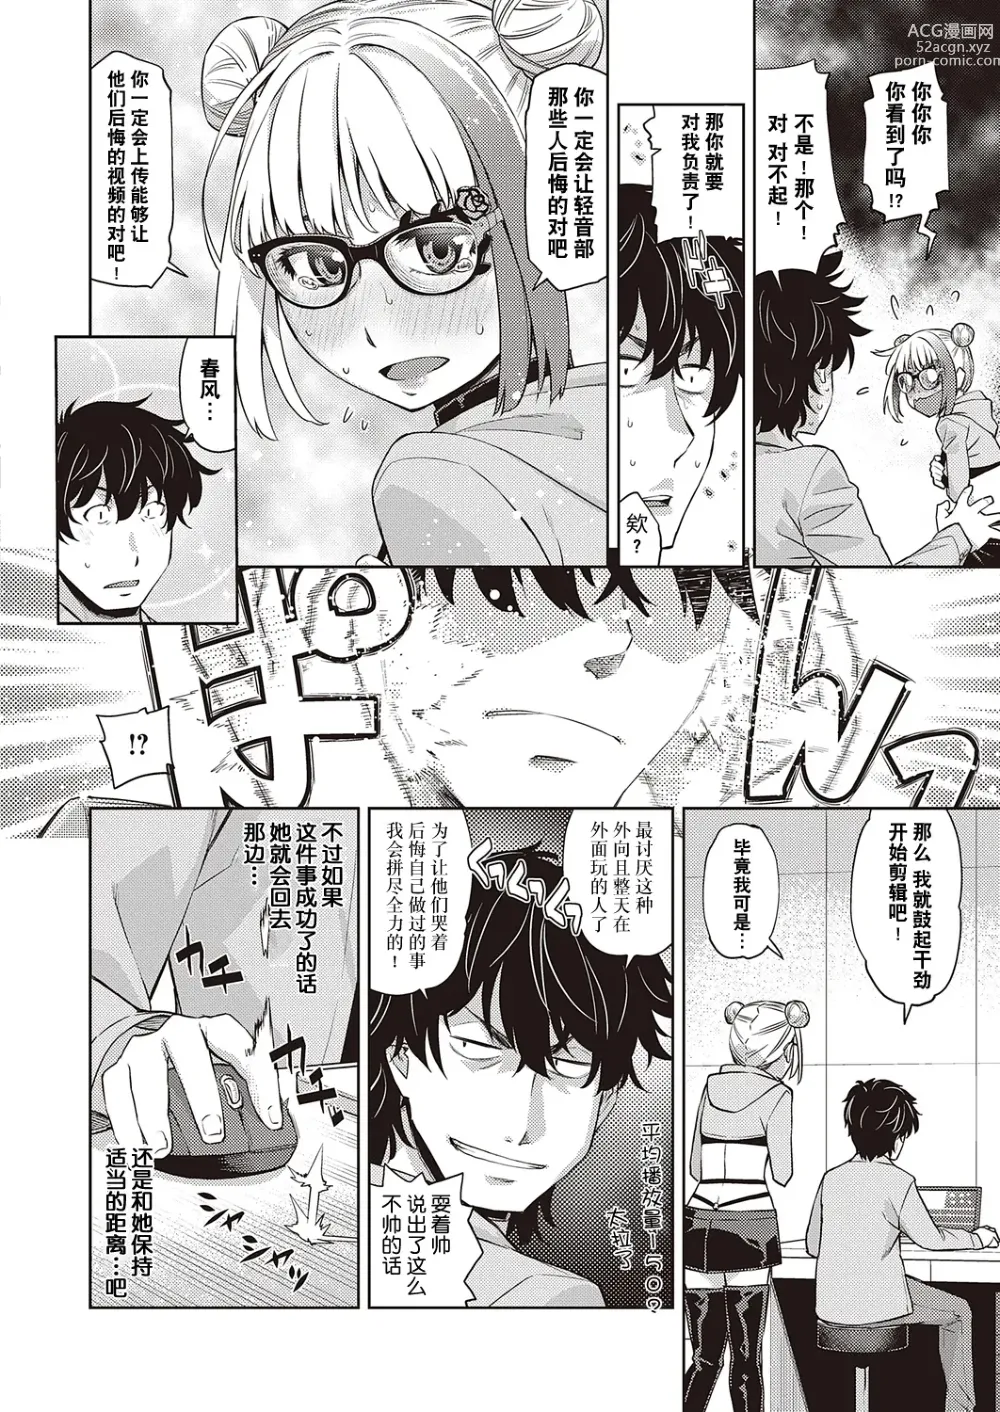 Page 6 of manga Houkago Megane Club